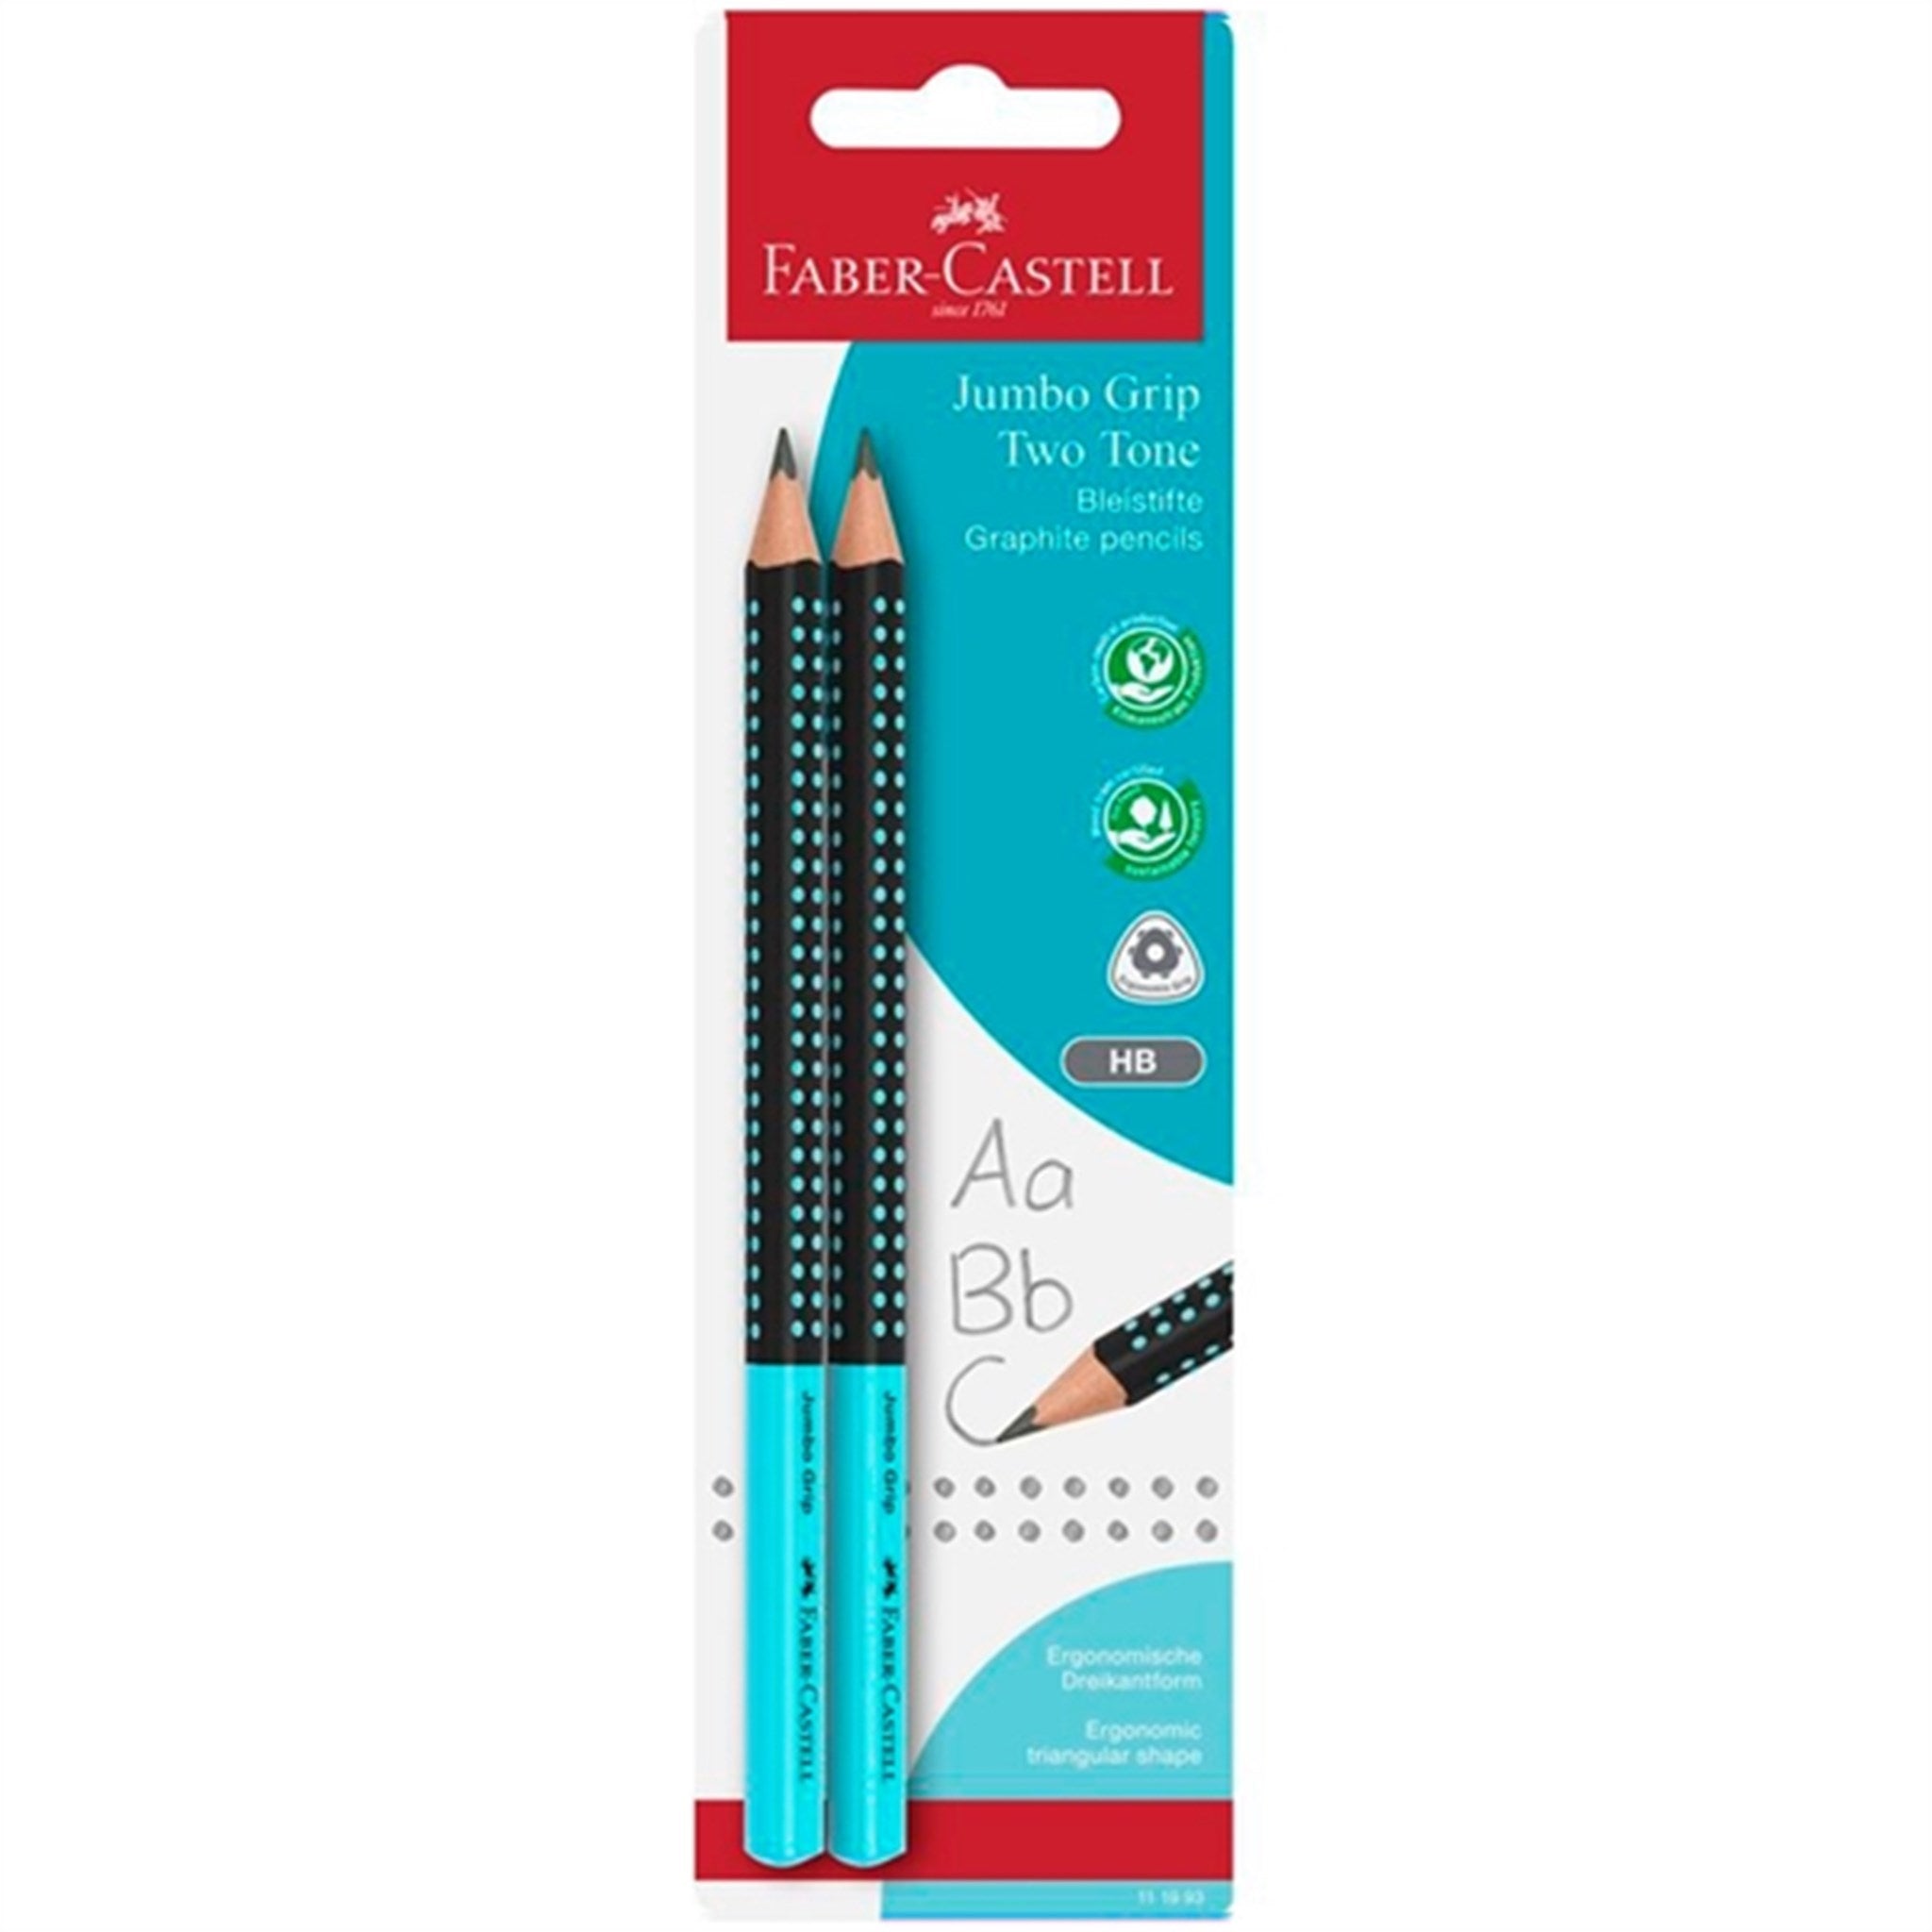 Faber Castell Jumbo Grip Pencils 2x2 Turkis